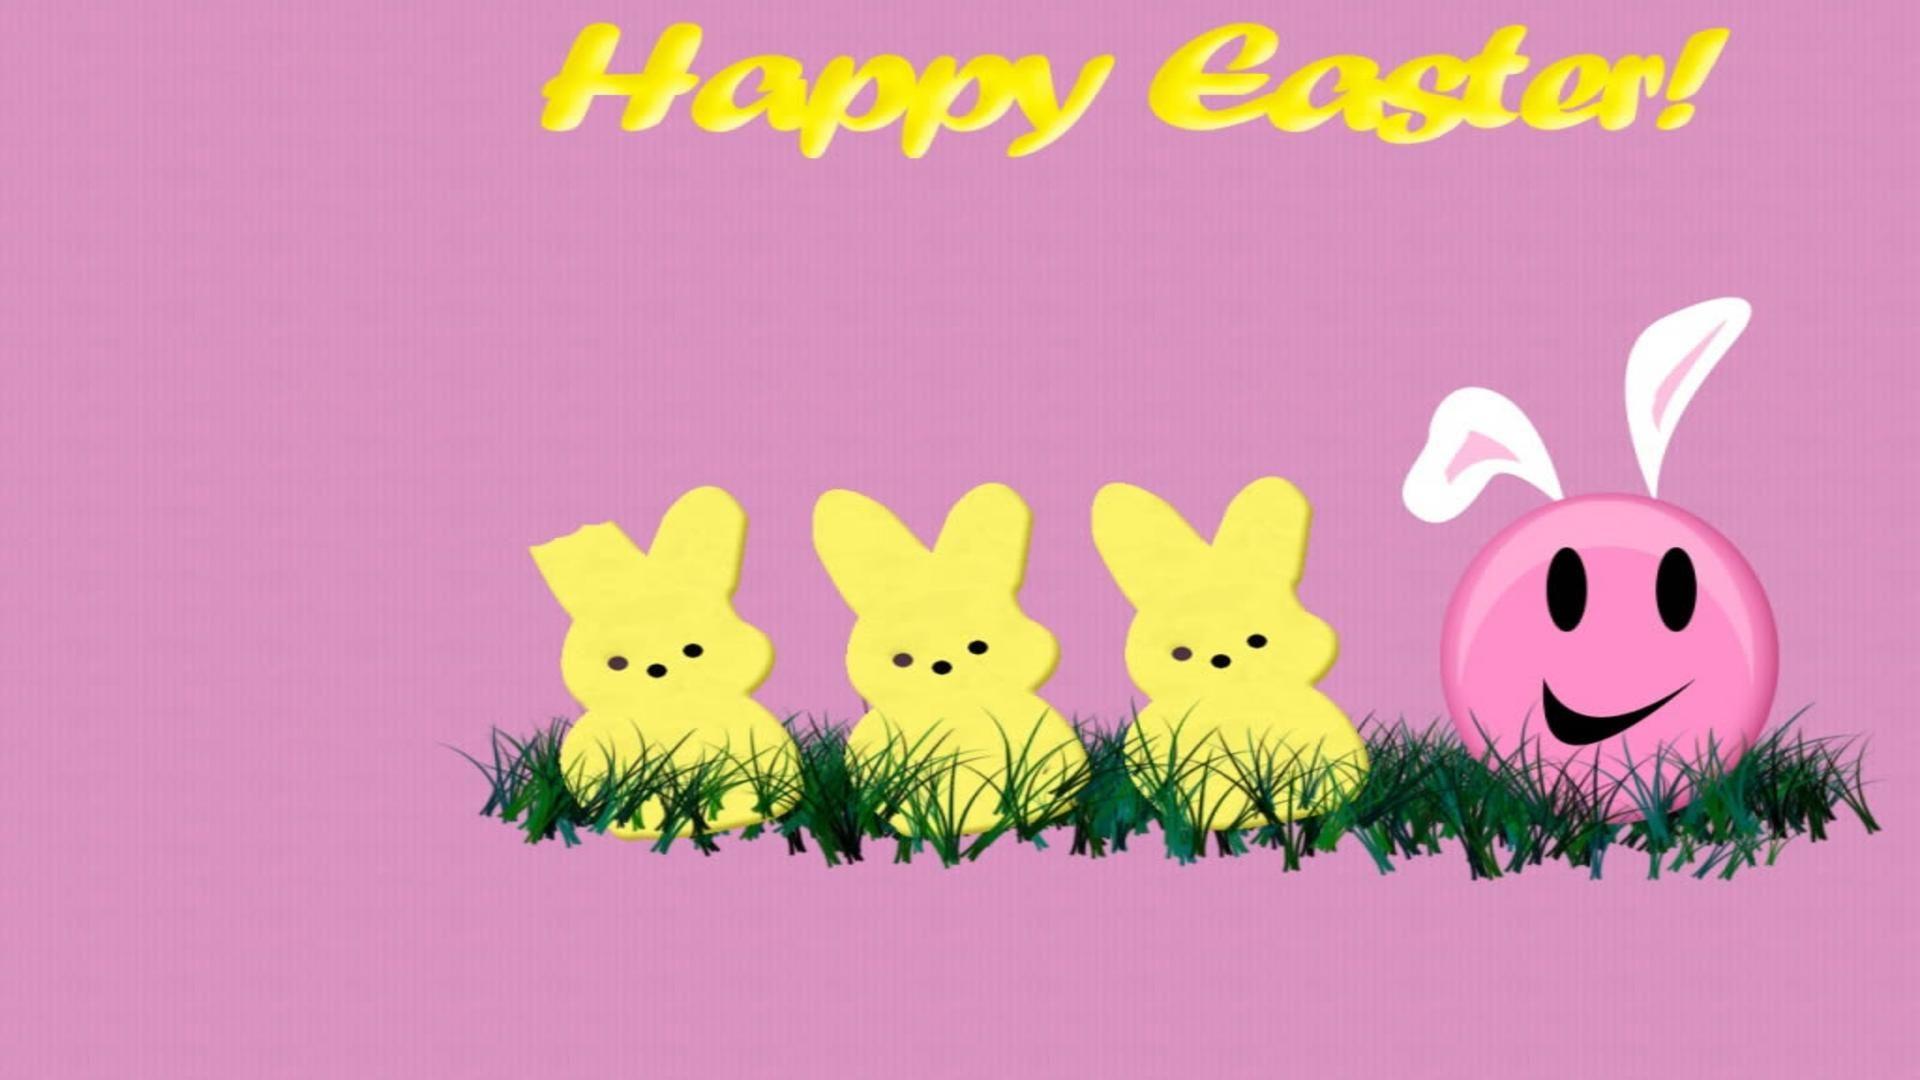 Happy Easter Pink Theme Desktop Background Wallpaper Image